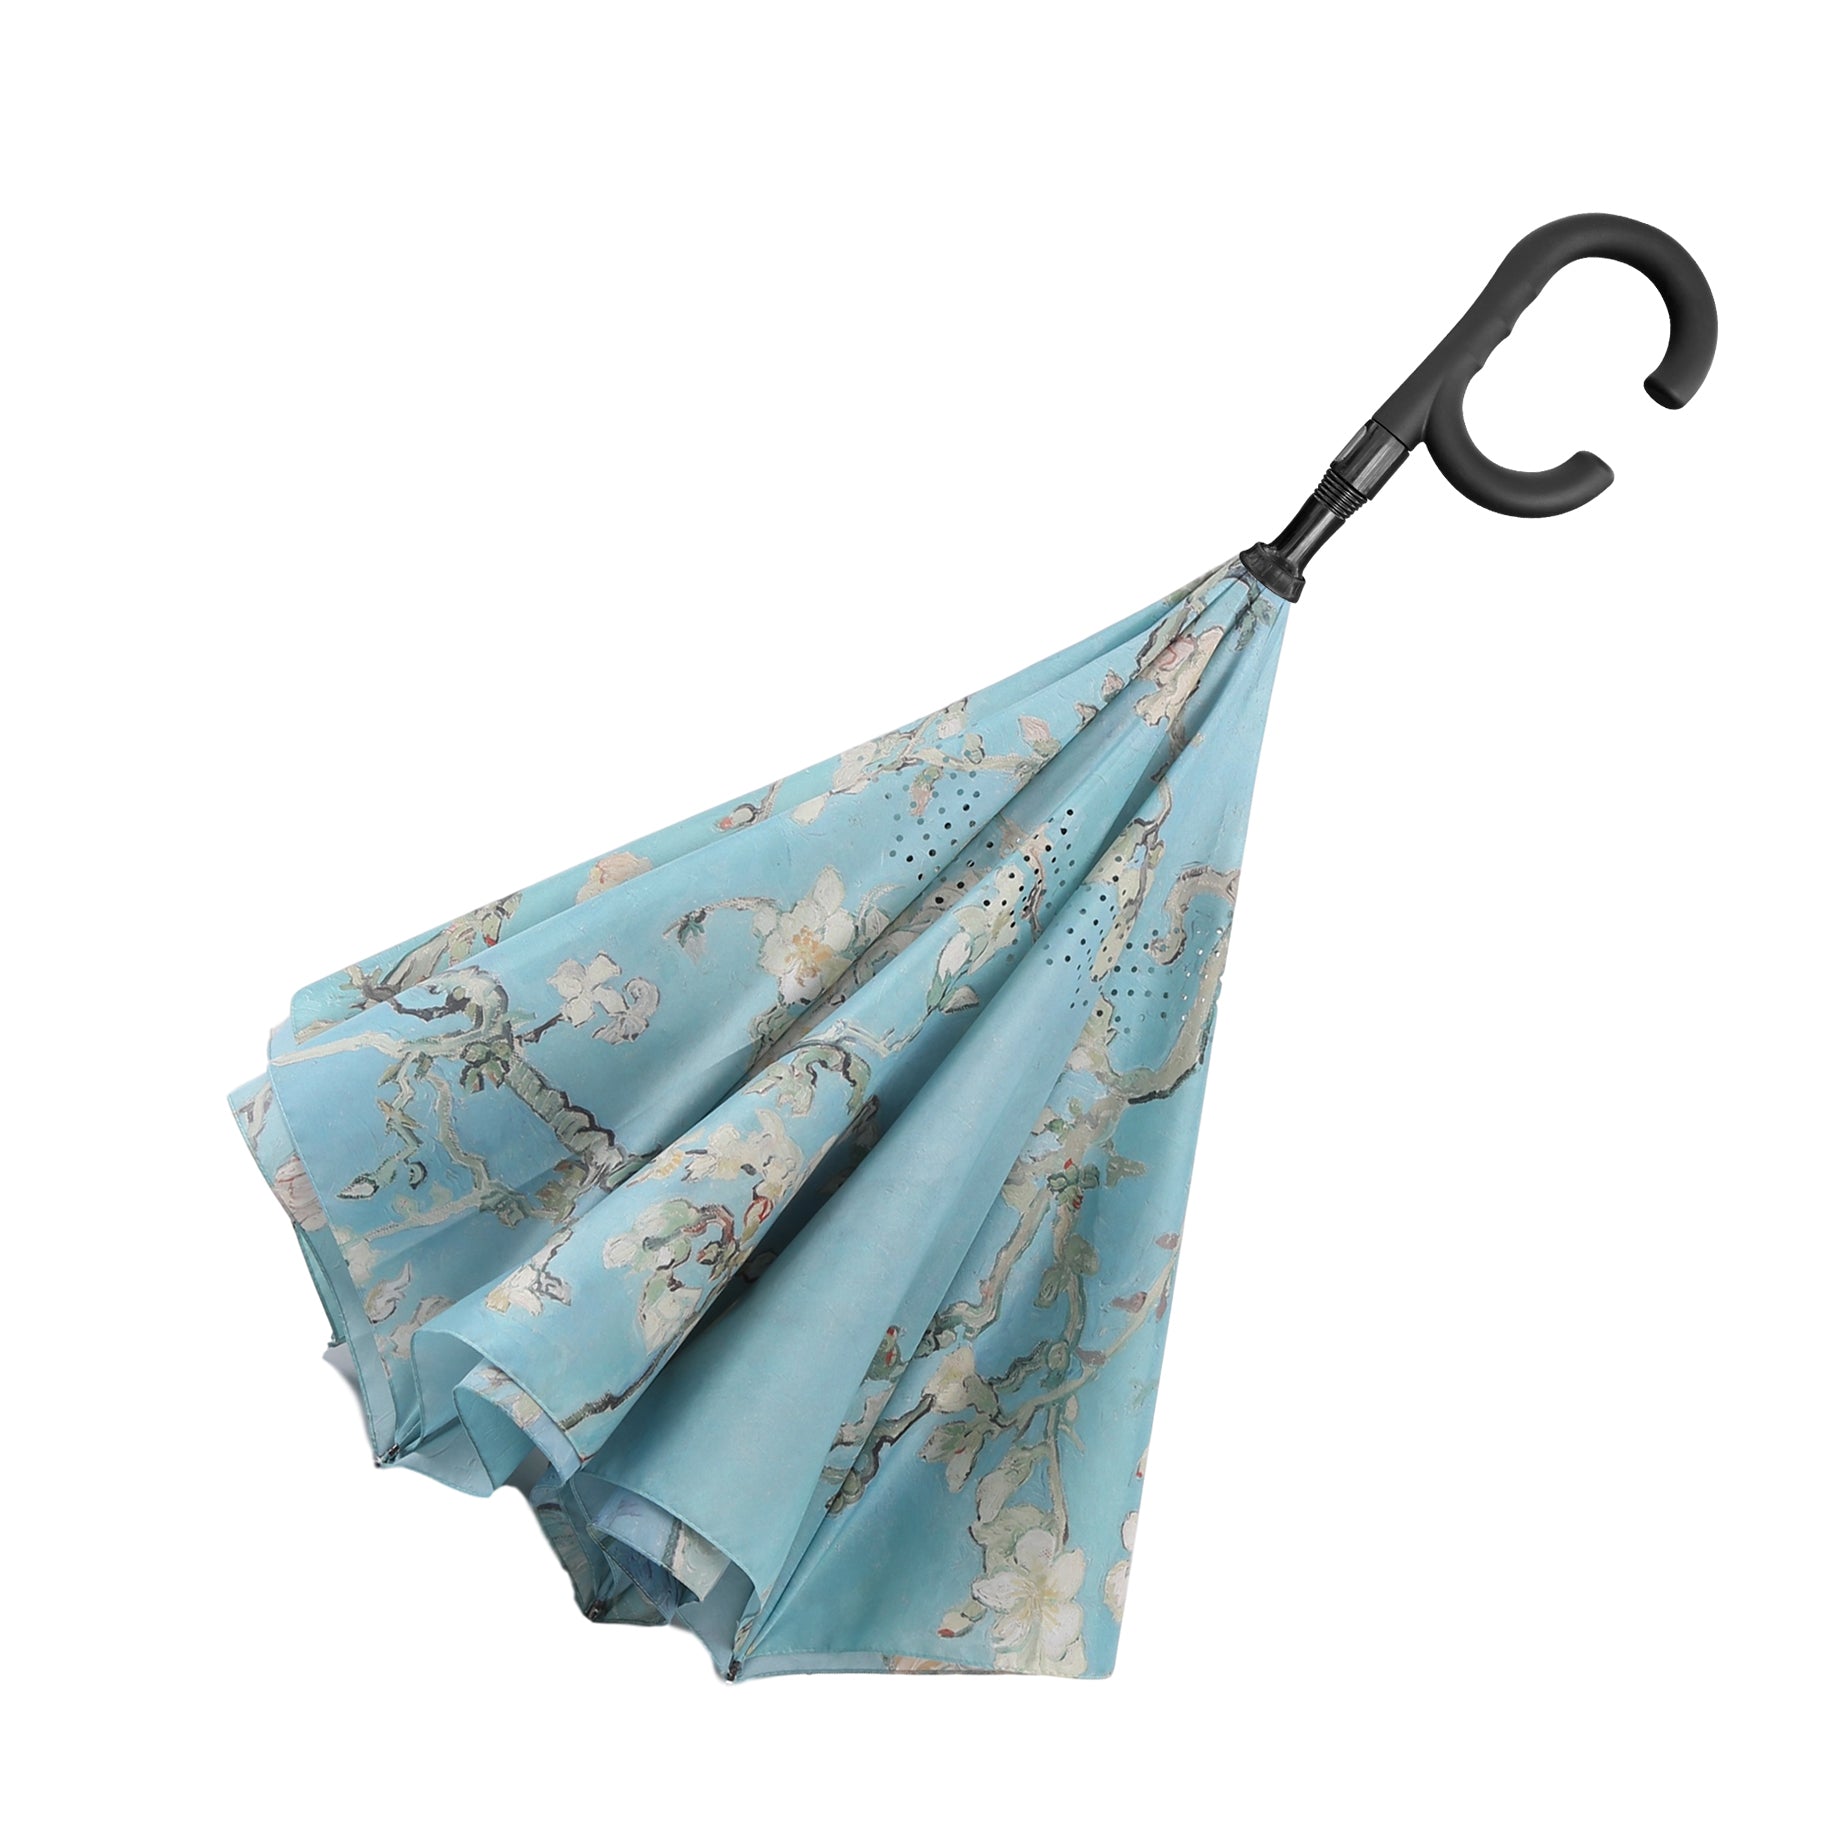 van Gogh Almond Blossom Reverse Umbrella